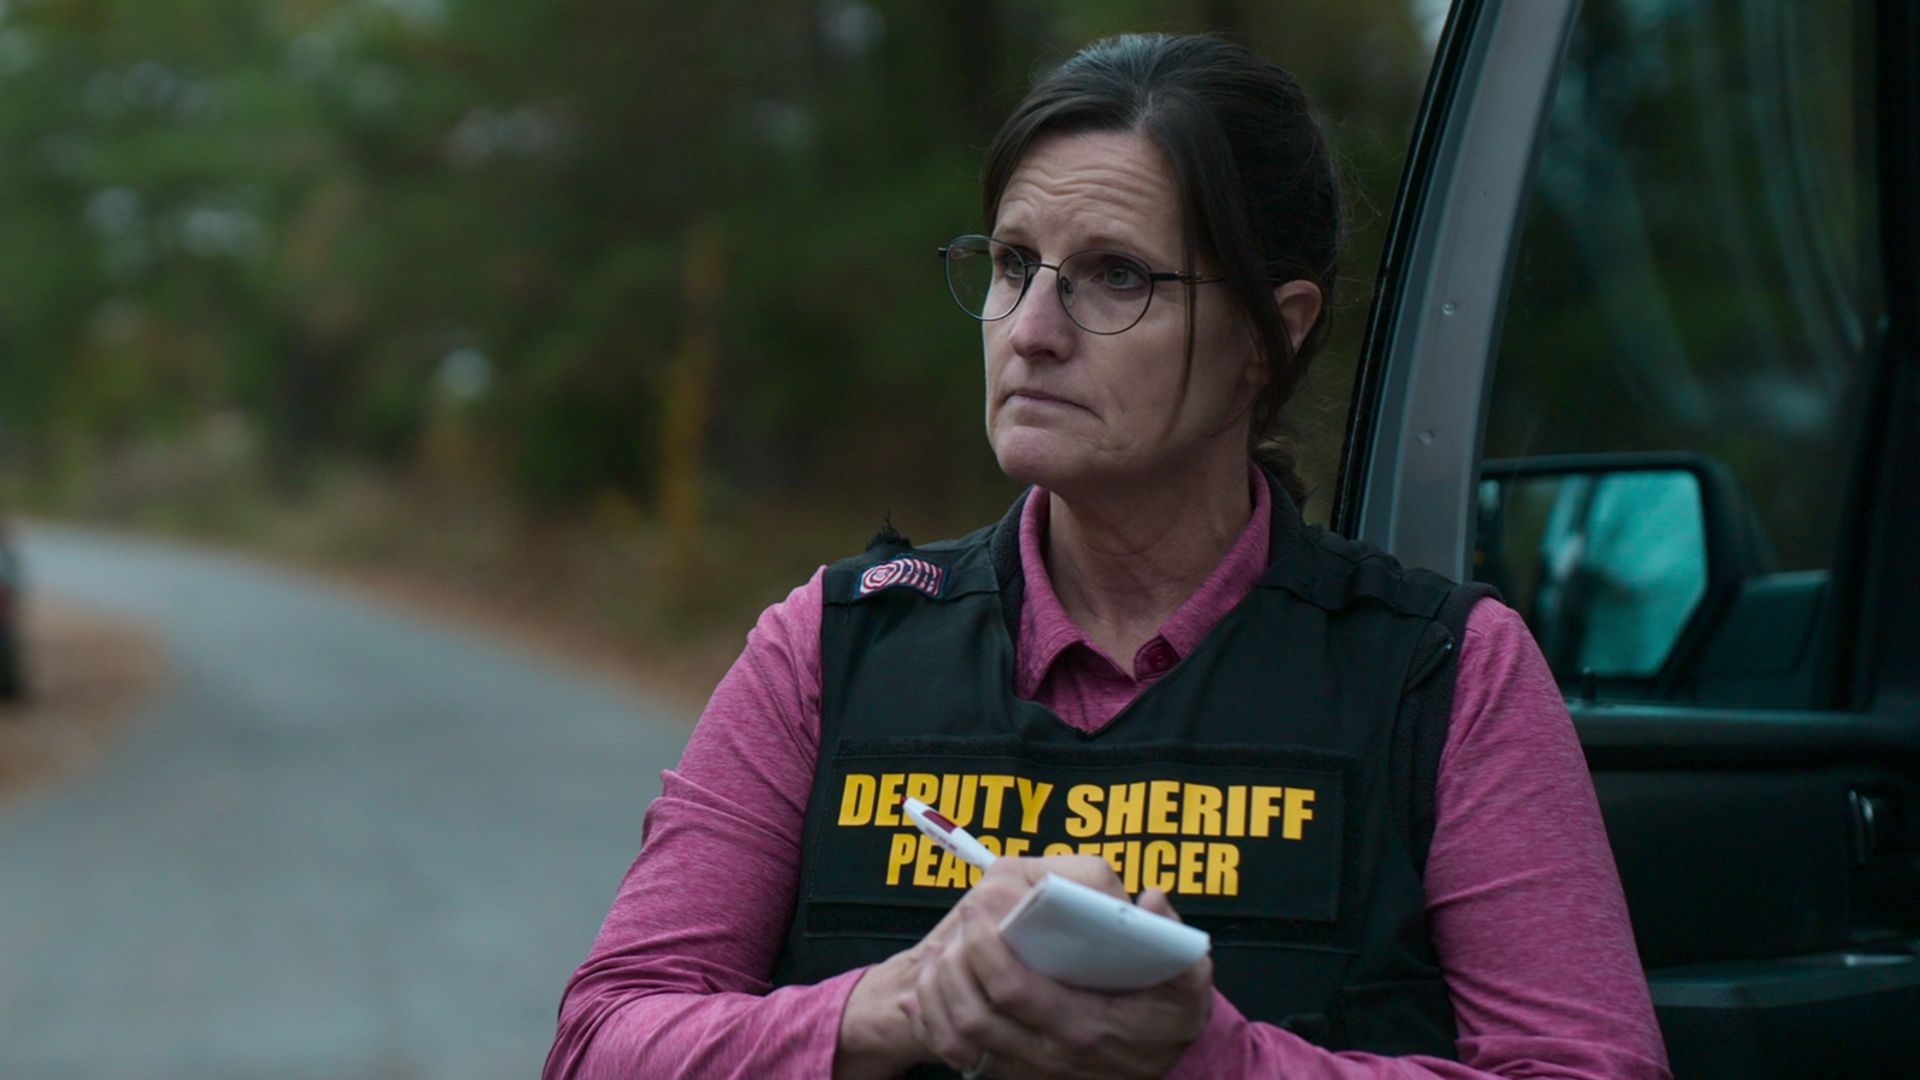 Missing: Dead or Alive? Deputy Sheriff Officer seen in Netflix documentary